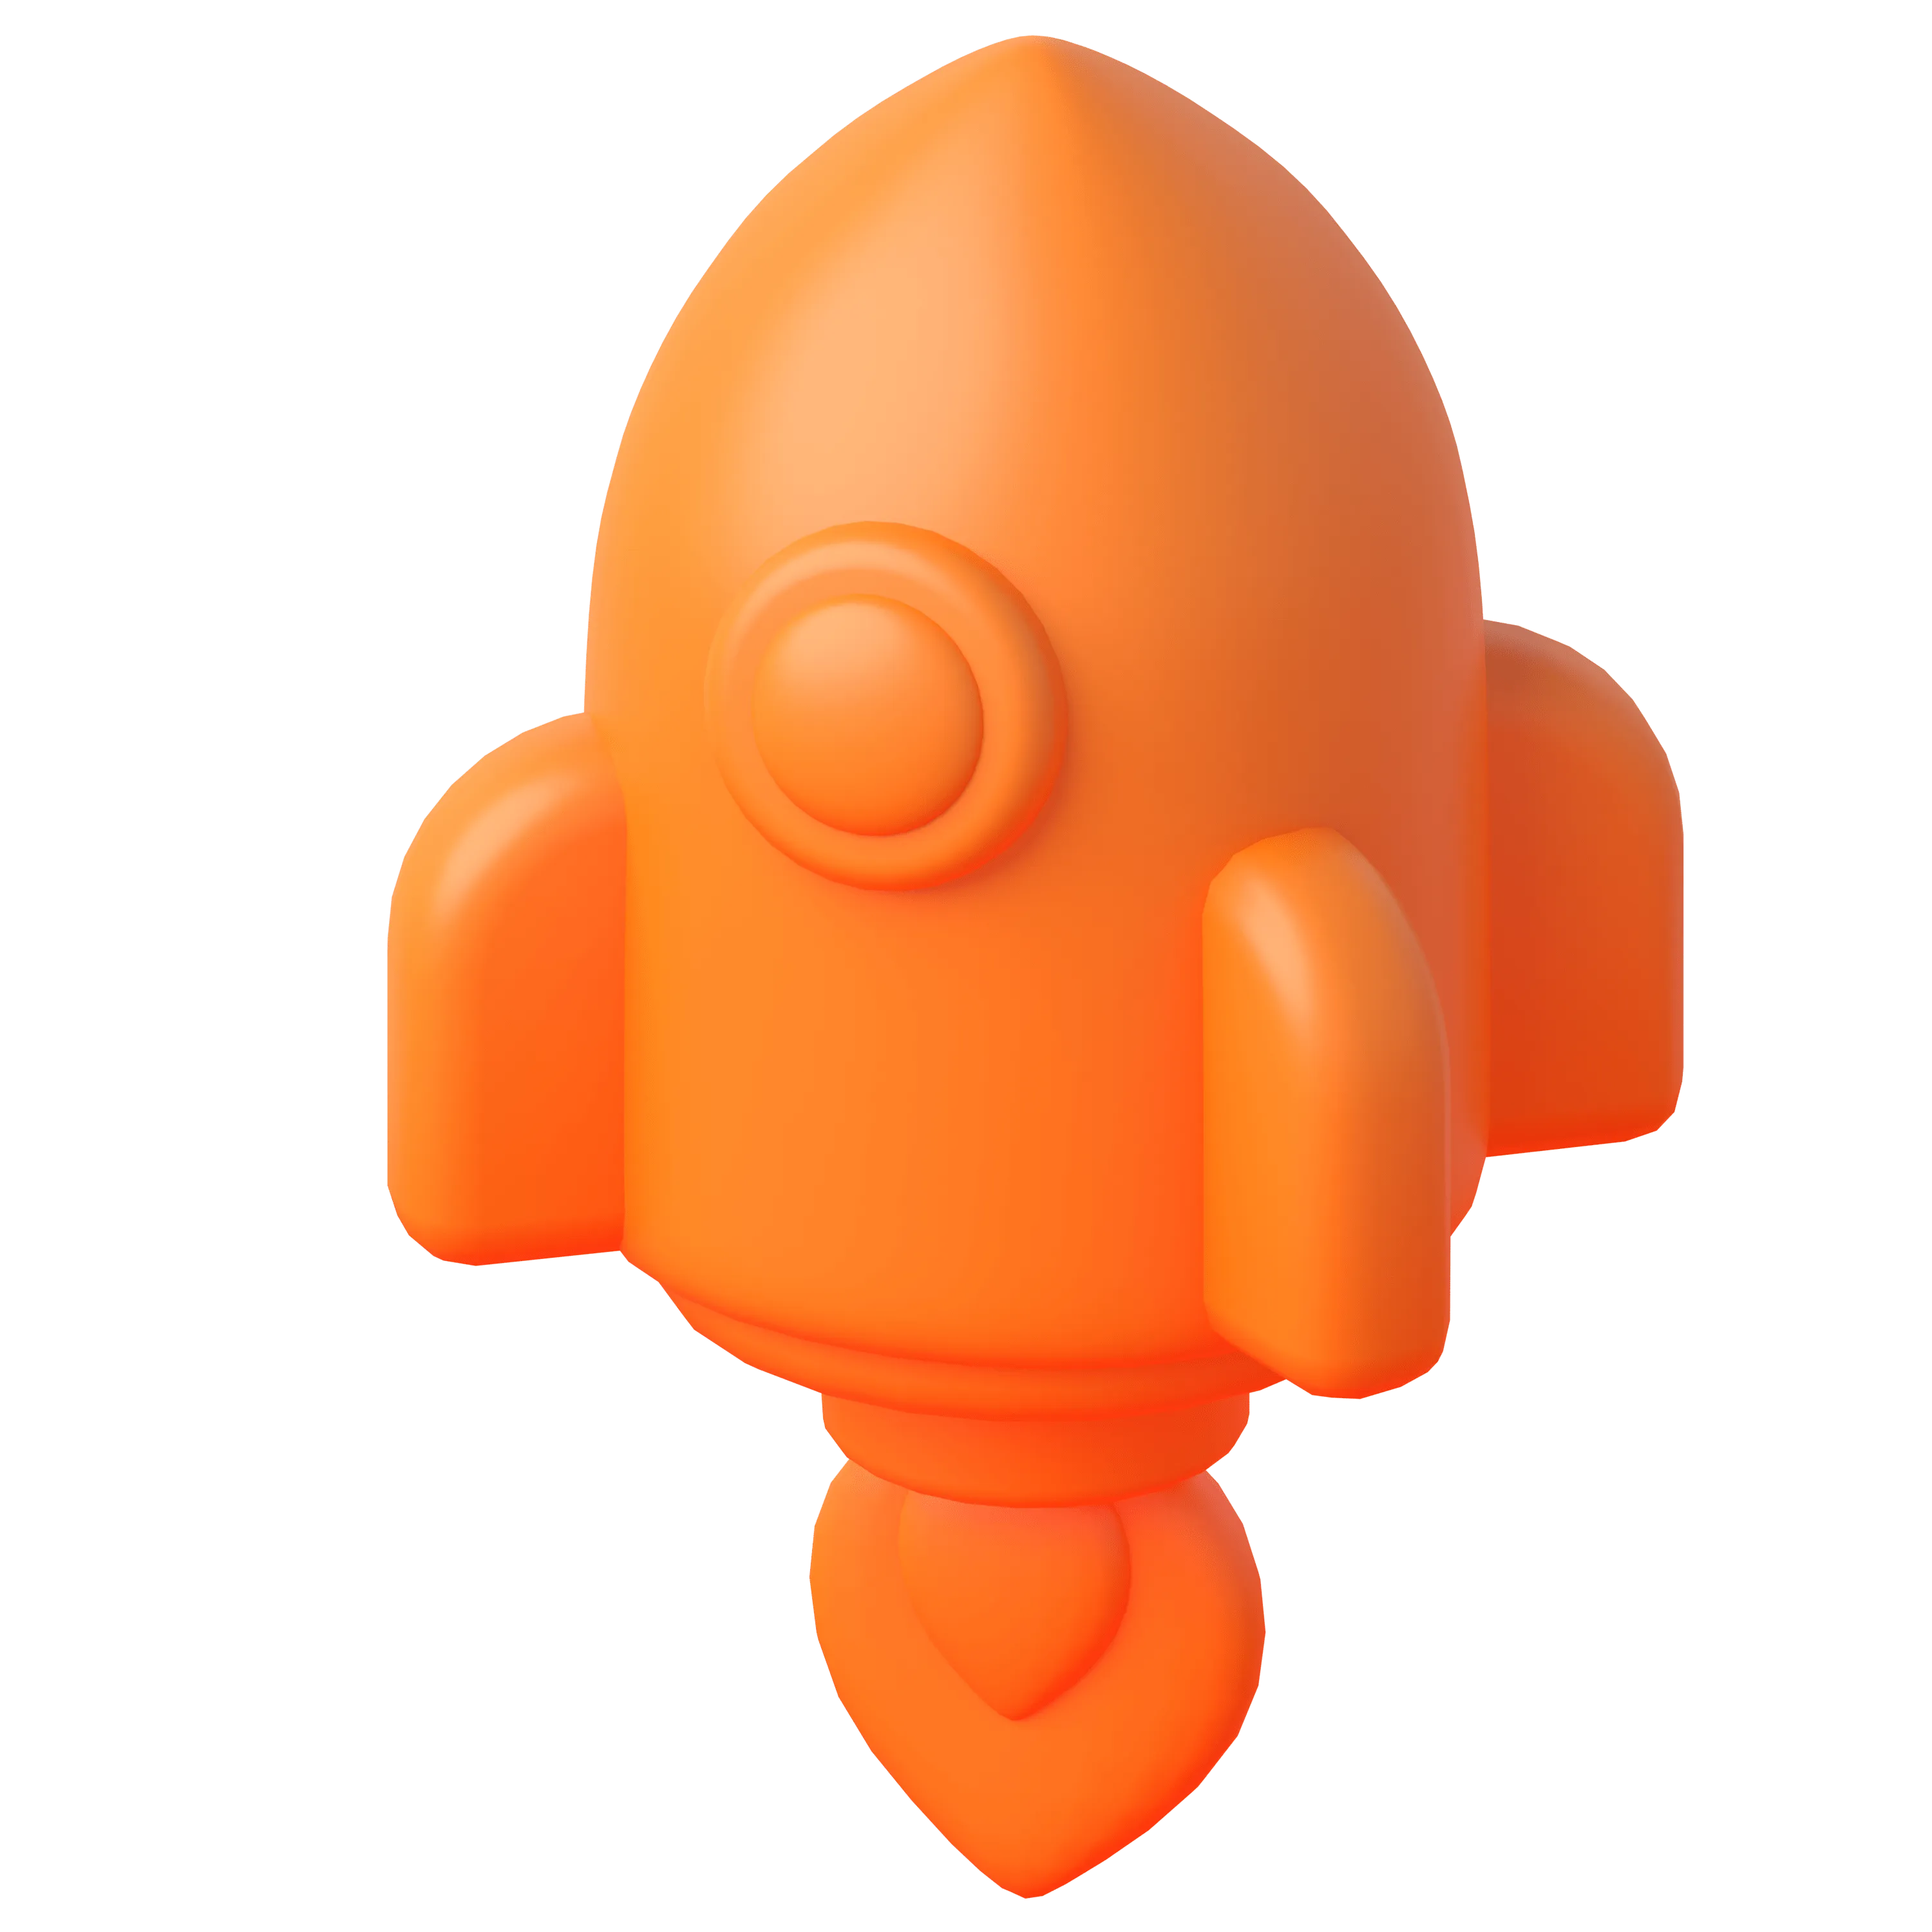 A 3D orange-red rocket ship icon.